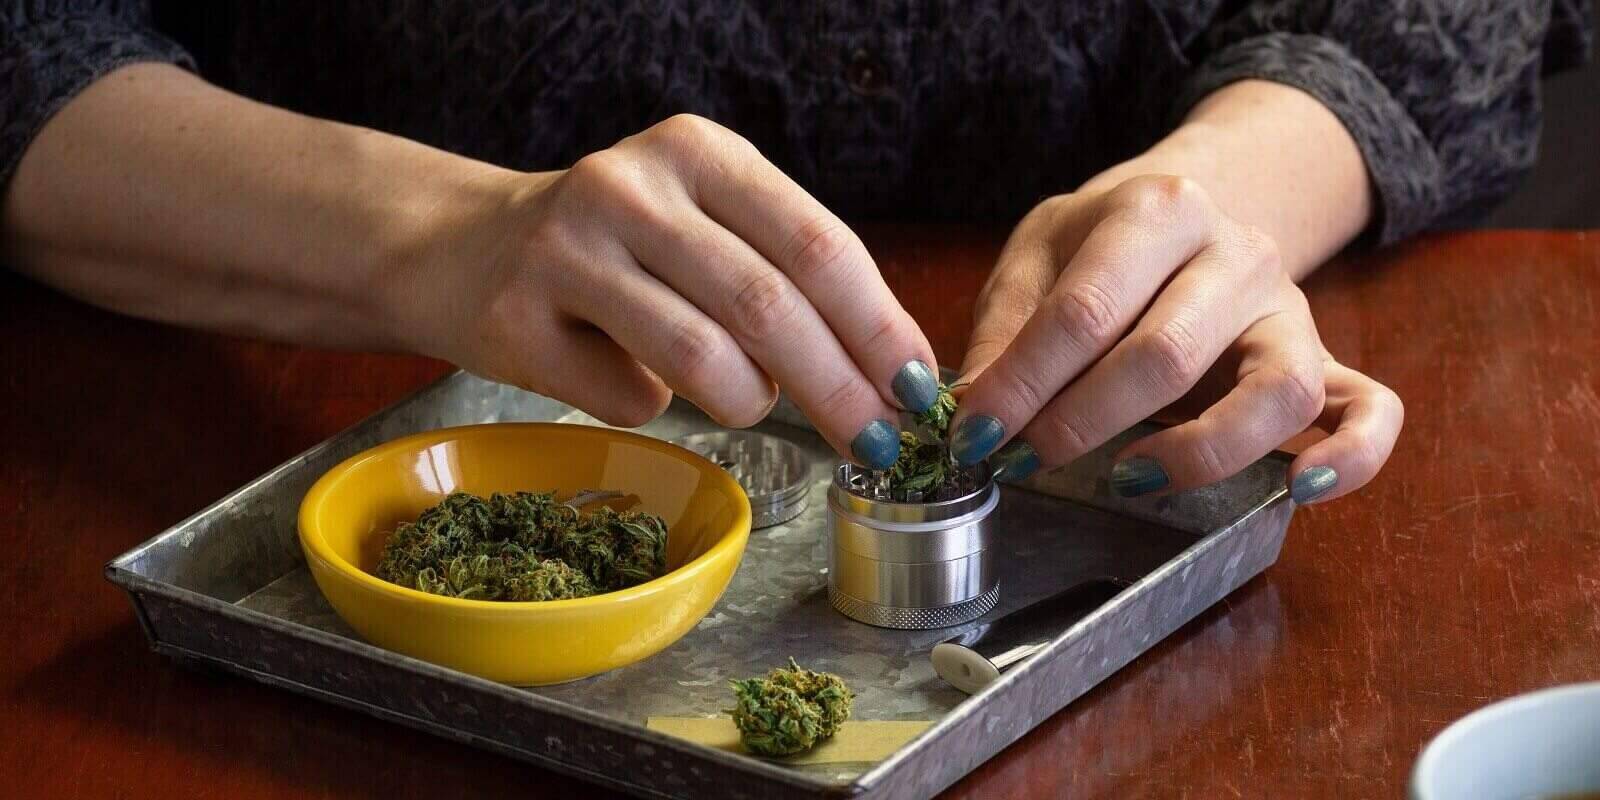 putting marijuana buds or hemp flowers in metal grinder in tray with smoking accessories